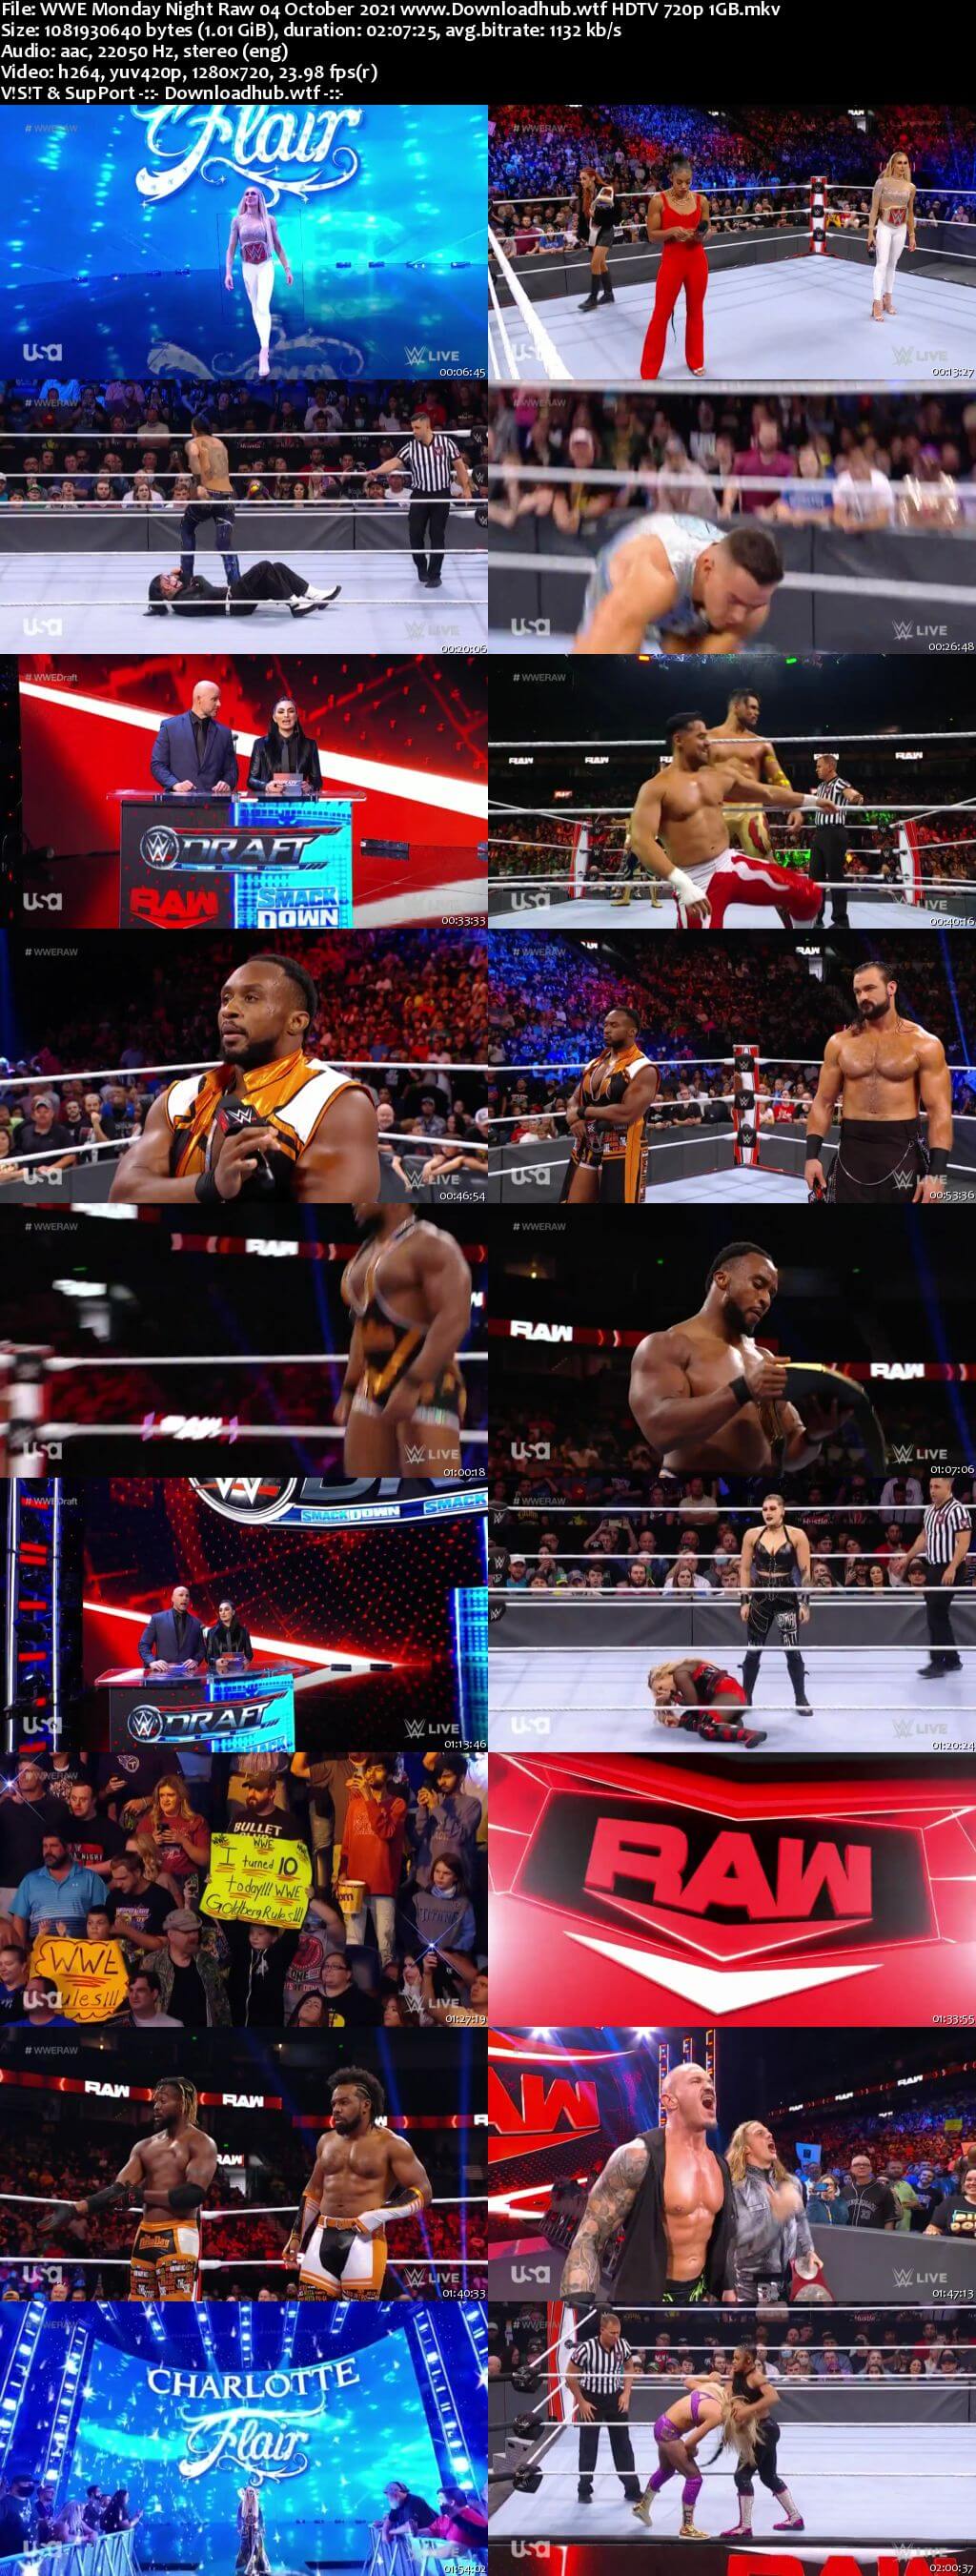 WWE Monday Night Raw October 4, 2021